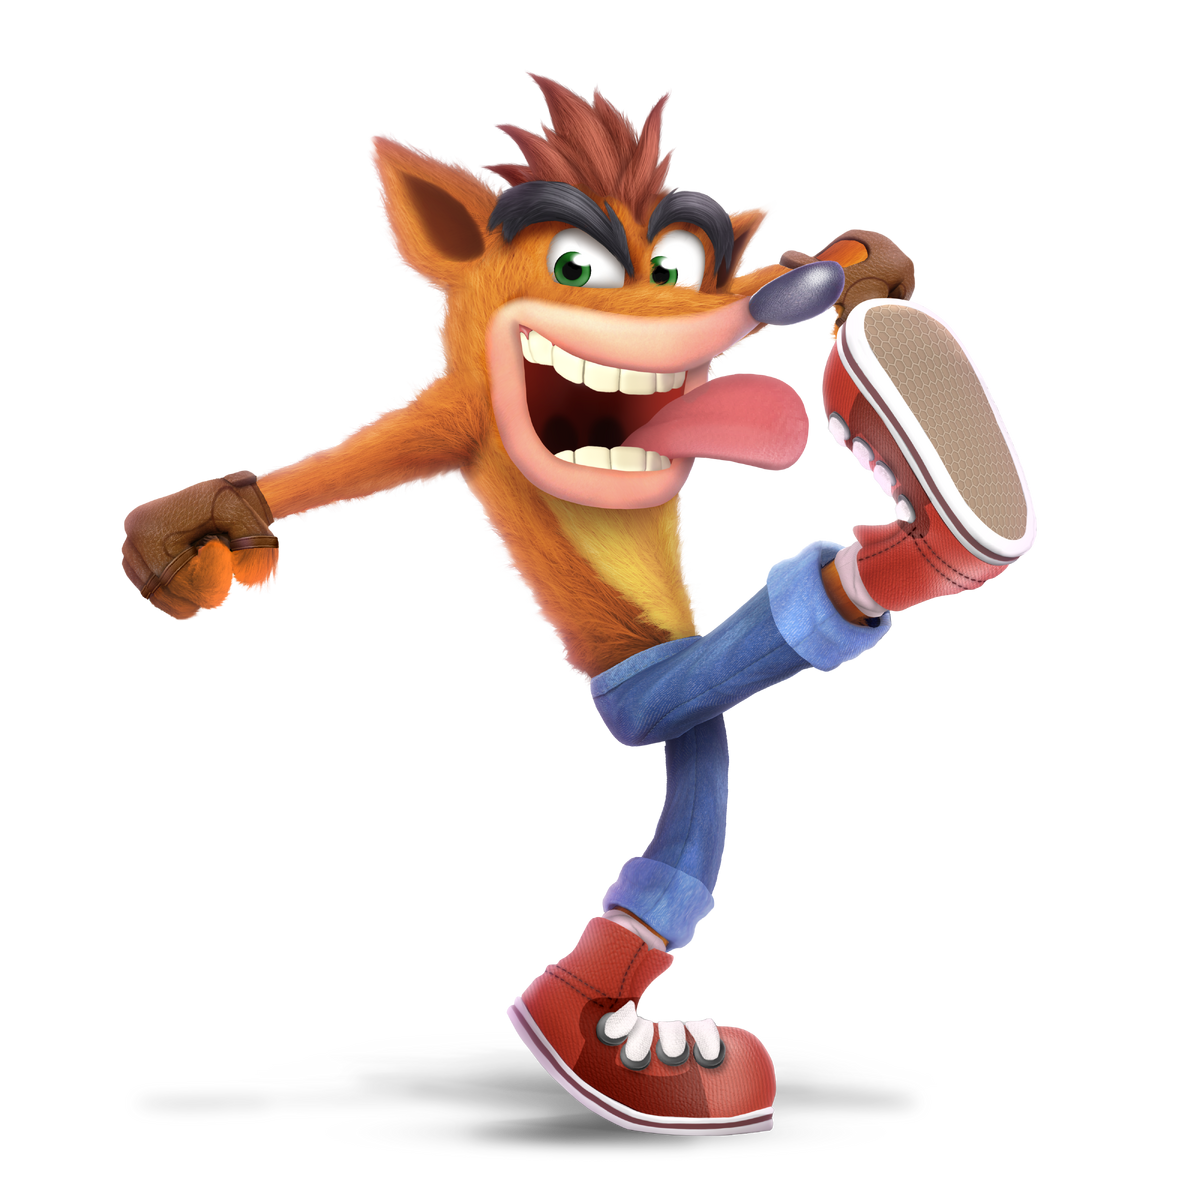 Rumor: Smash Bros.-like Crash Bandicoot brawler in the works